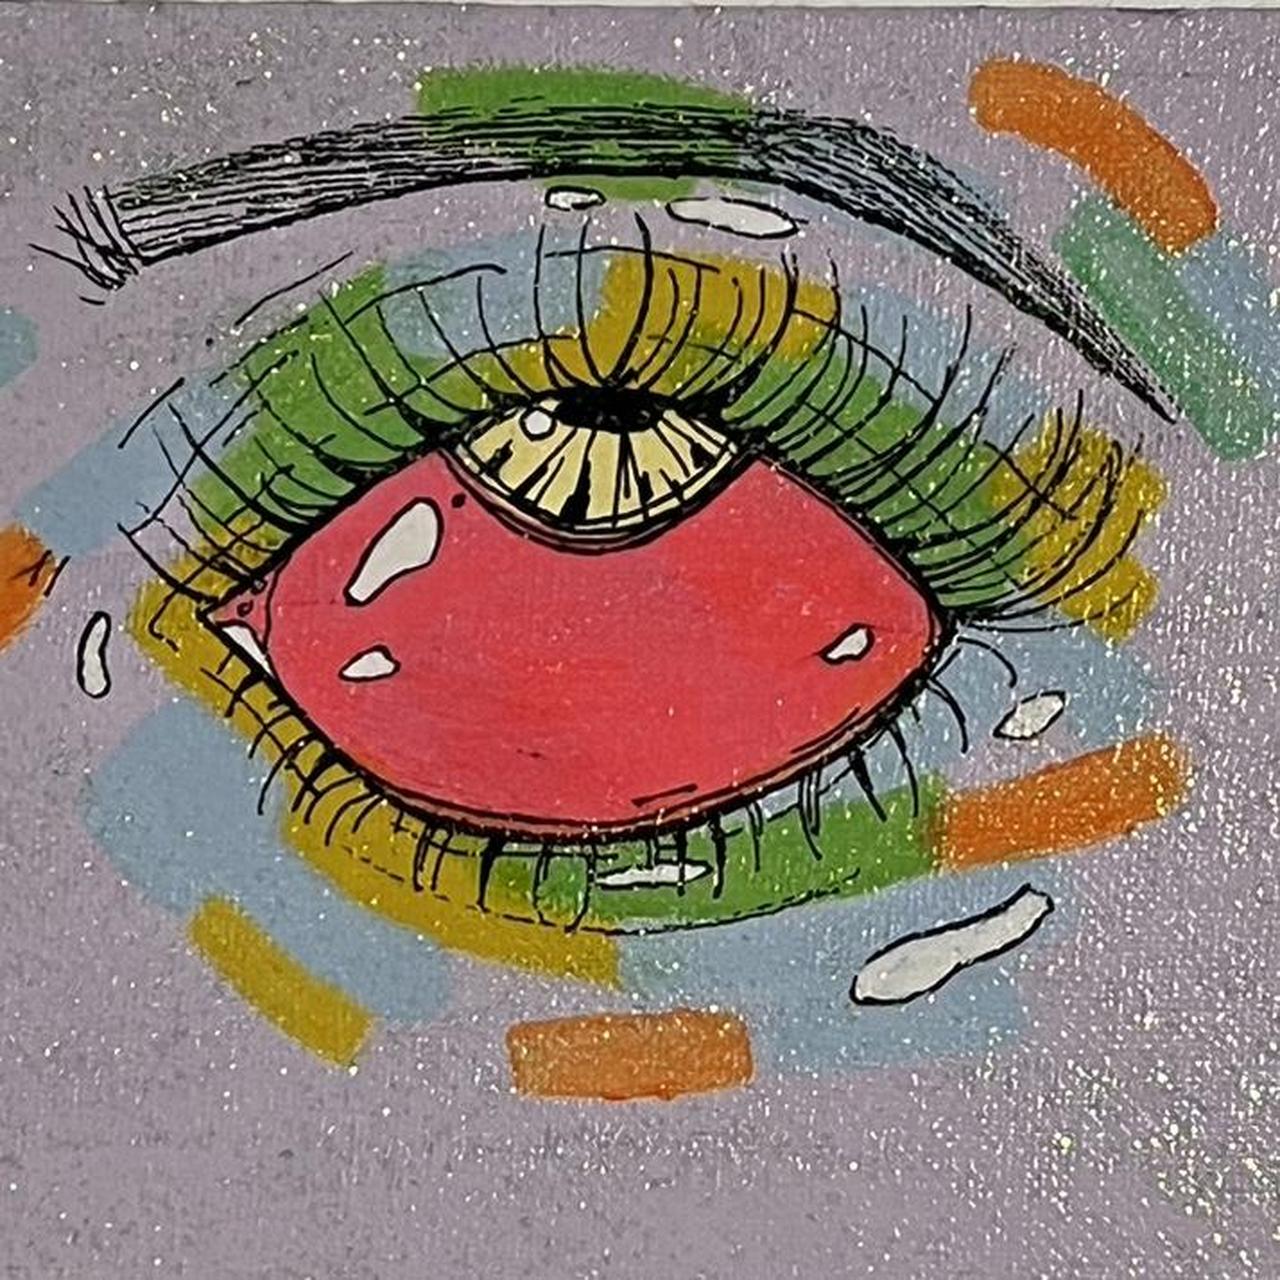 trippy eyeball drawing